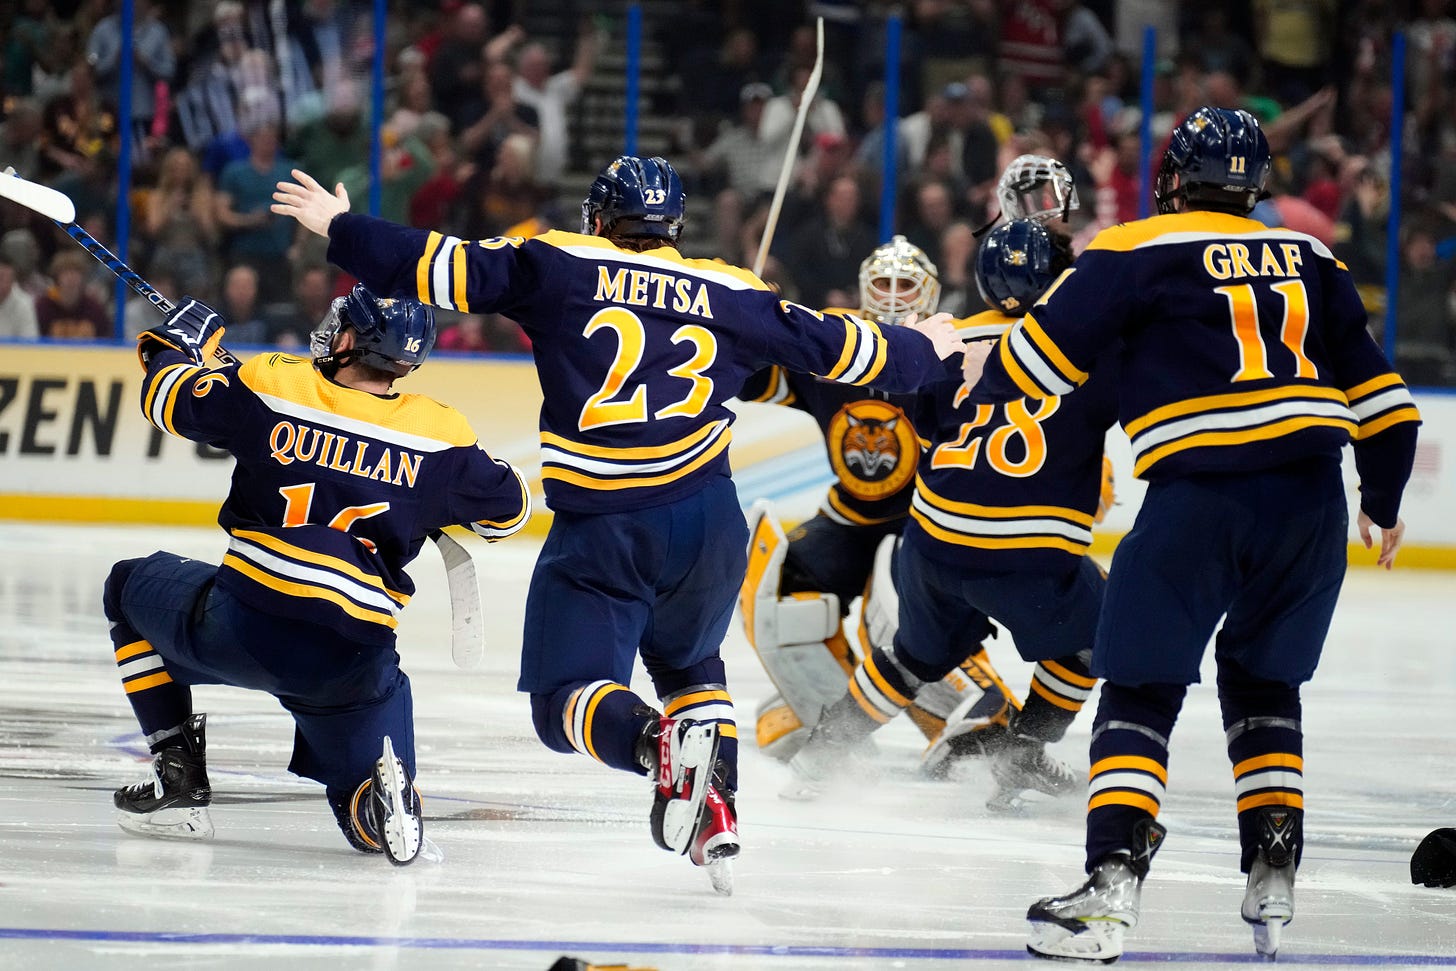 Quinnipiac defeats Minnesota in OT to win ice hockey national title